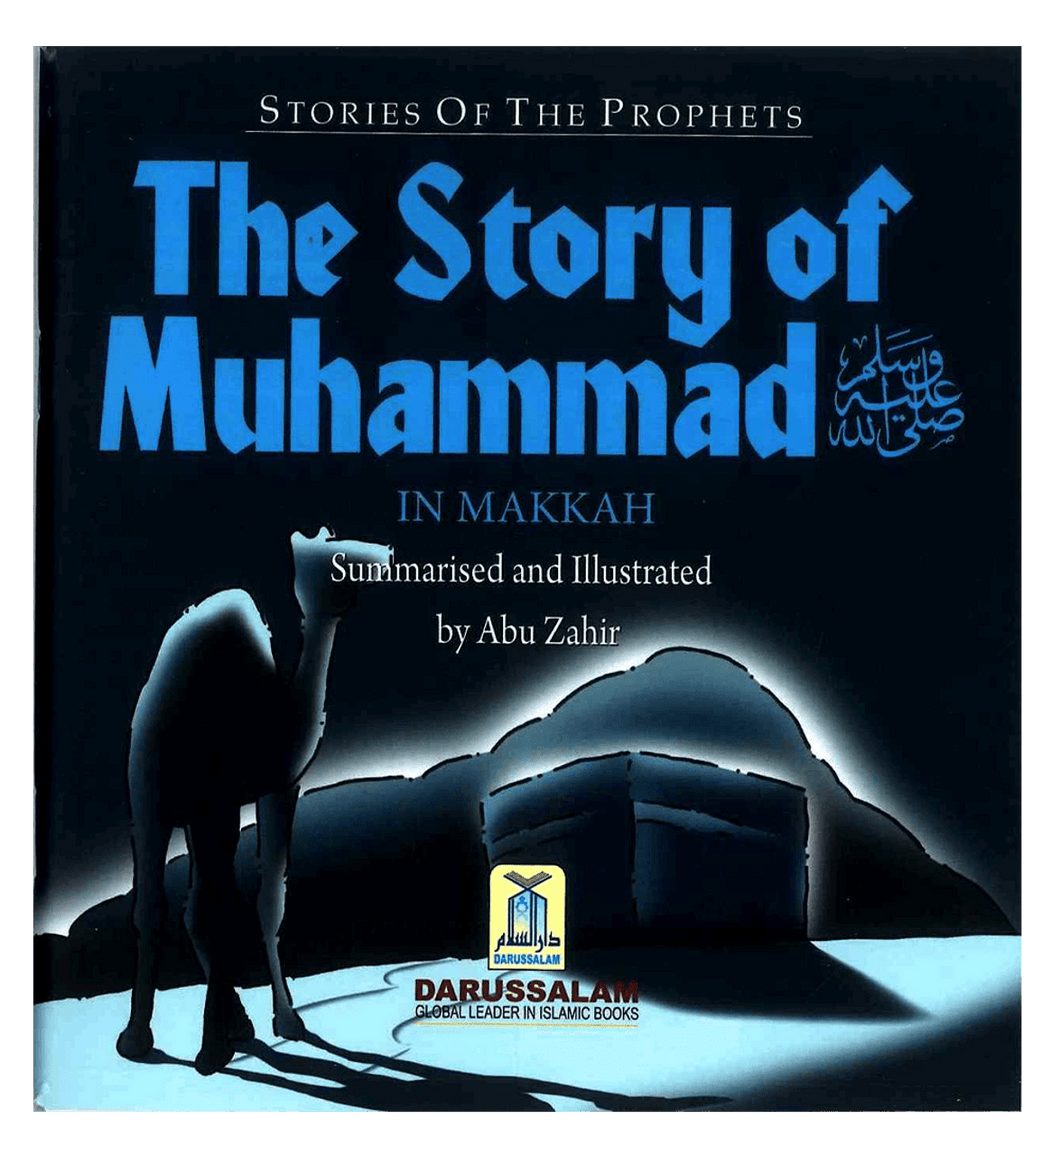 The Story of Muhammad (pbuh)